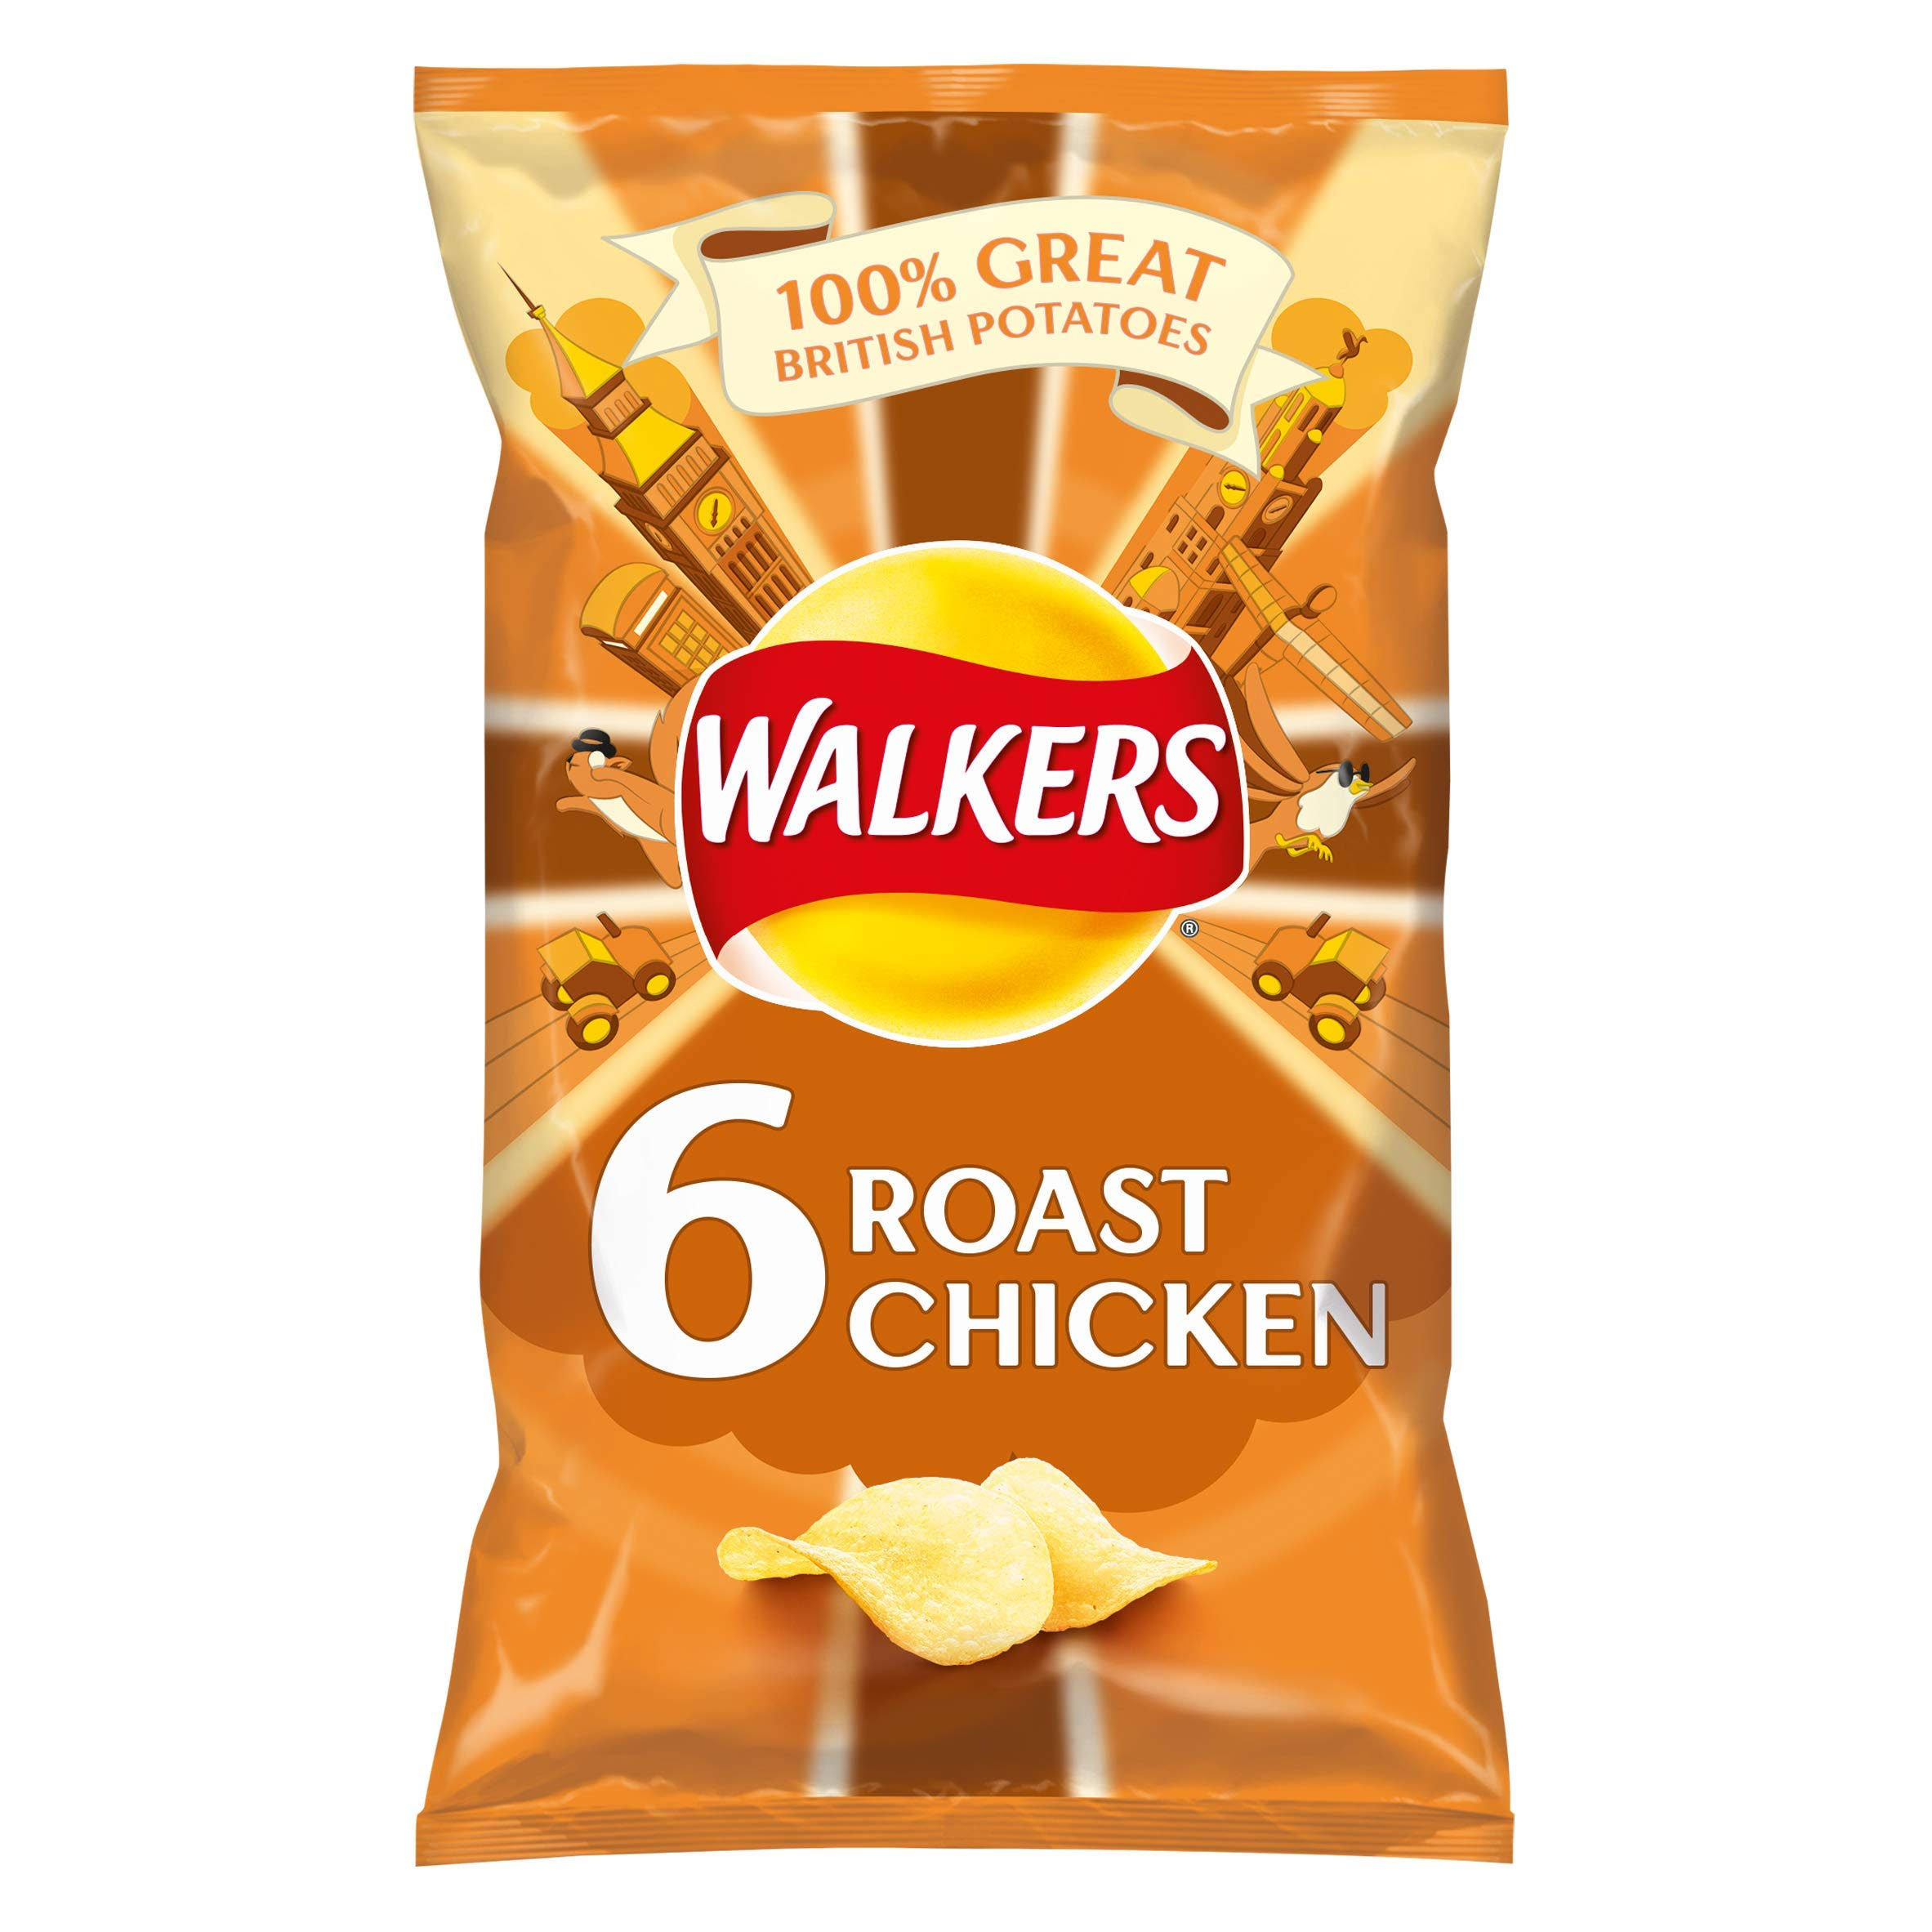 Walkers Crisps - Roast Chicken, 6 Pack